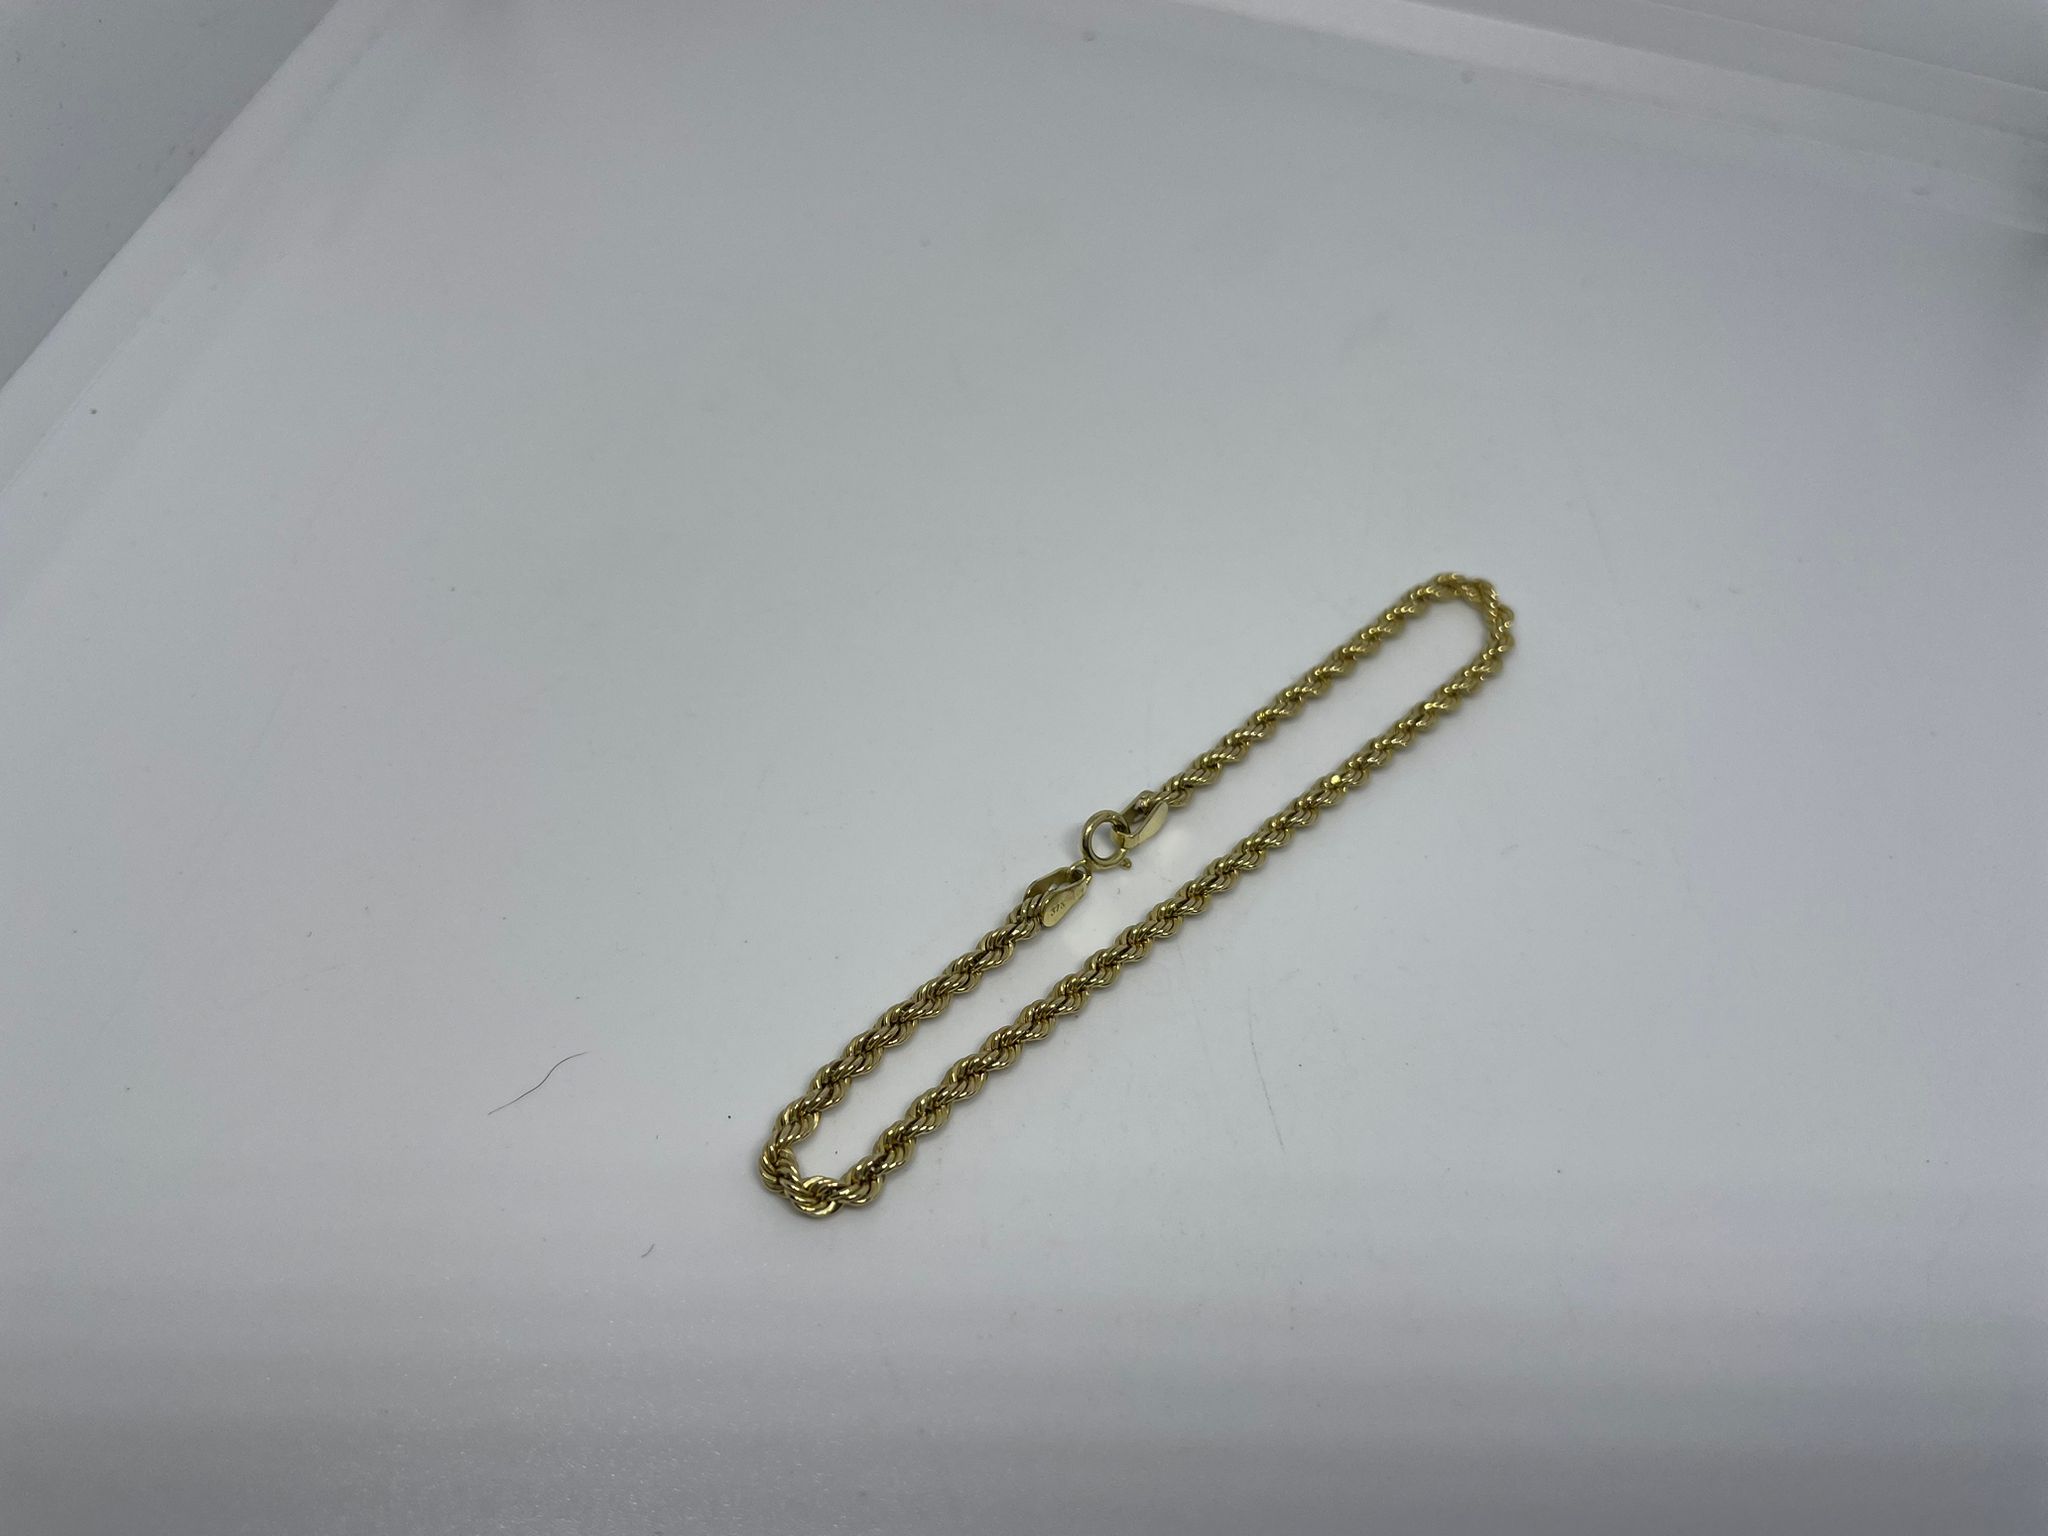 9 ct gold rope bracelet - Image 2 of 2